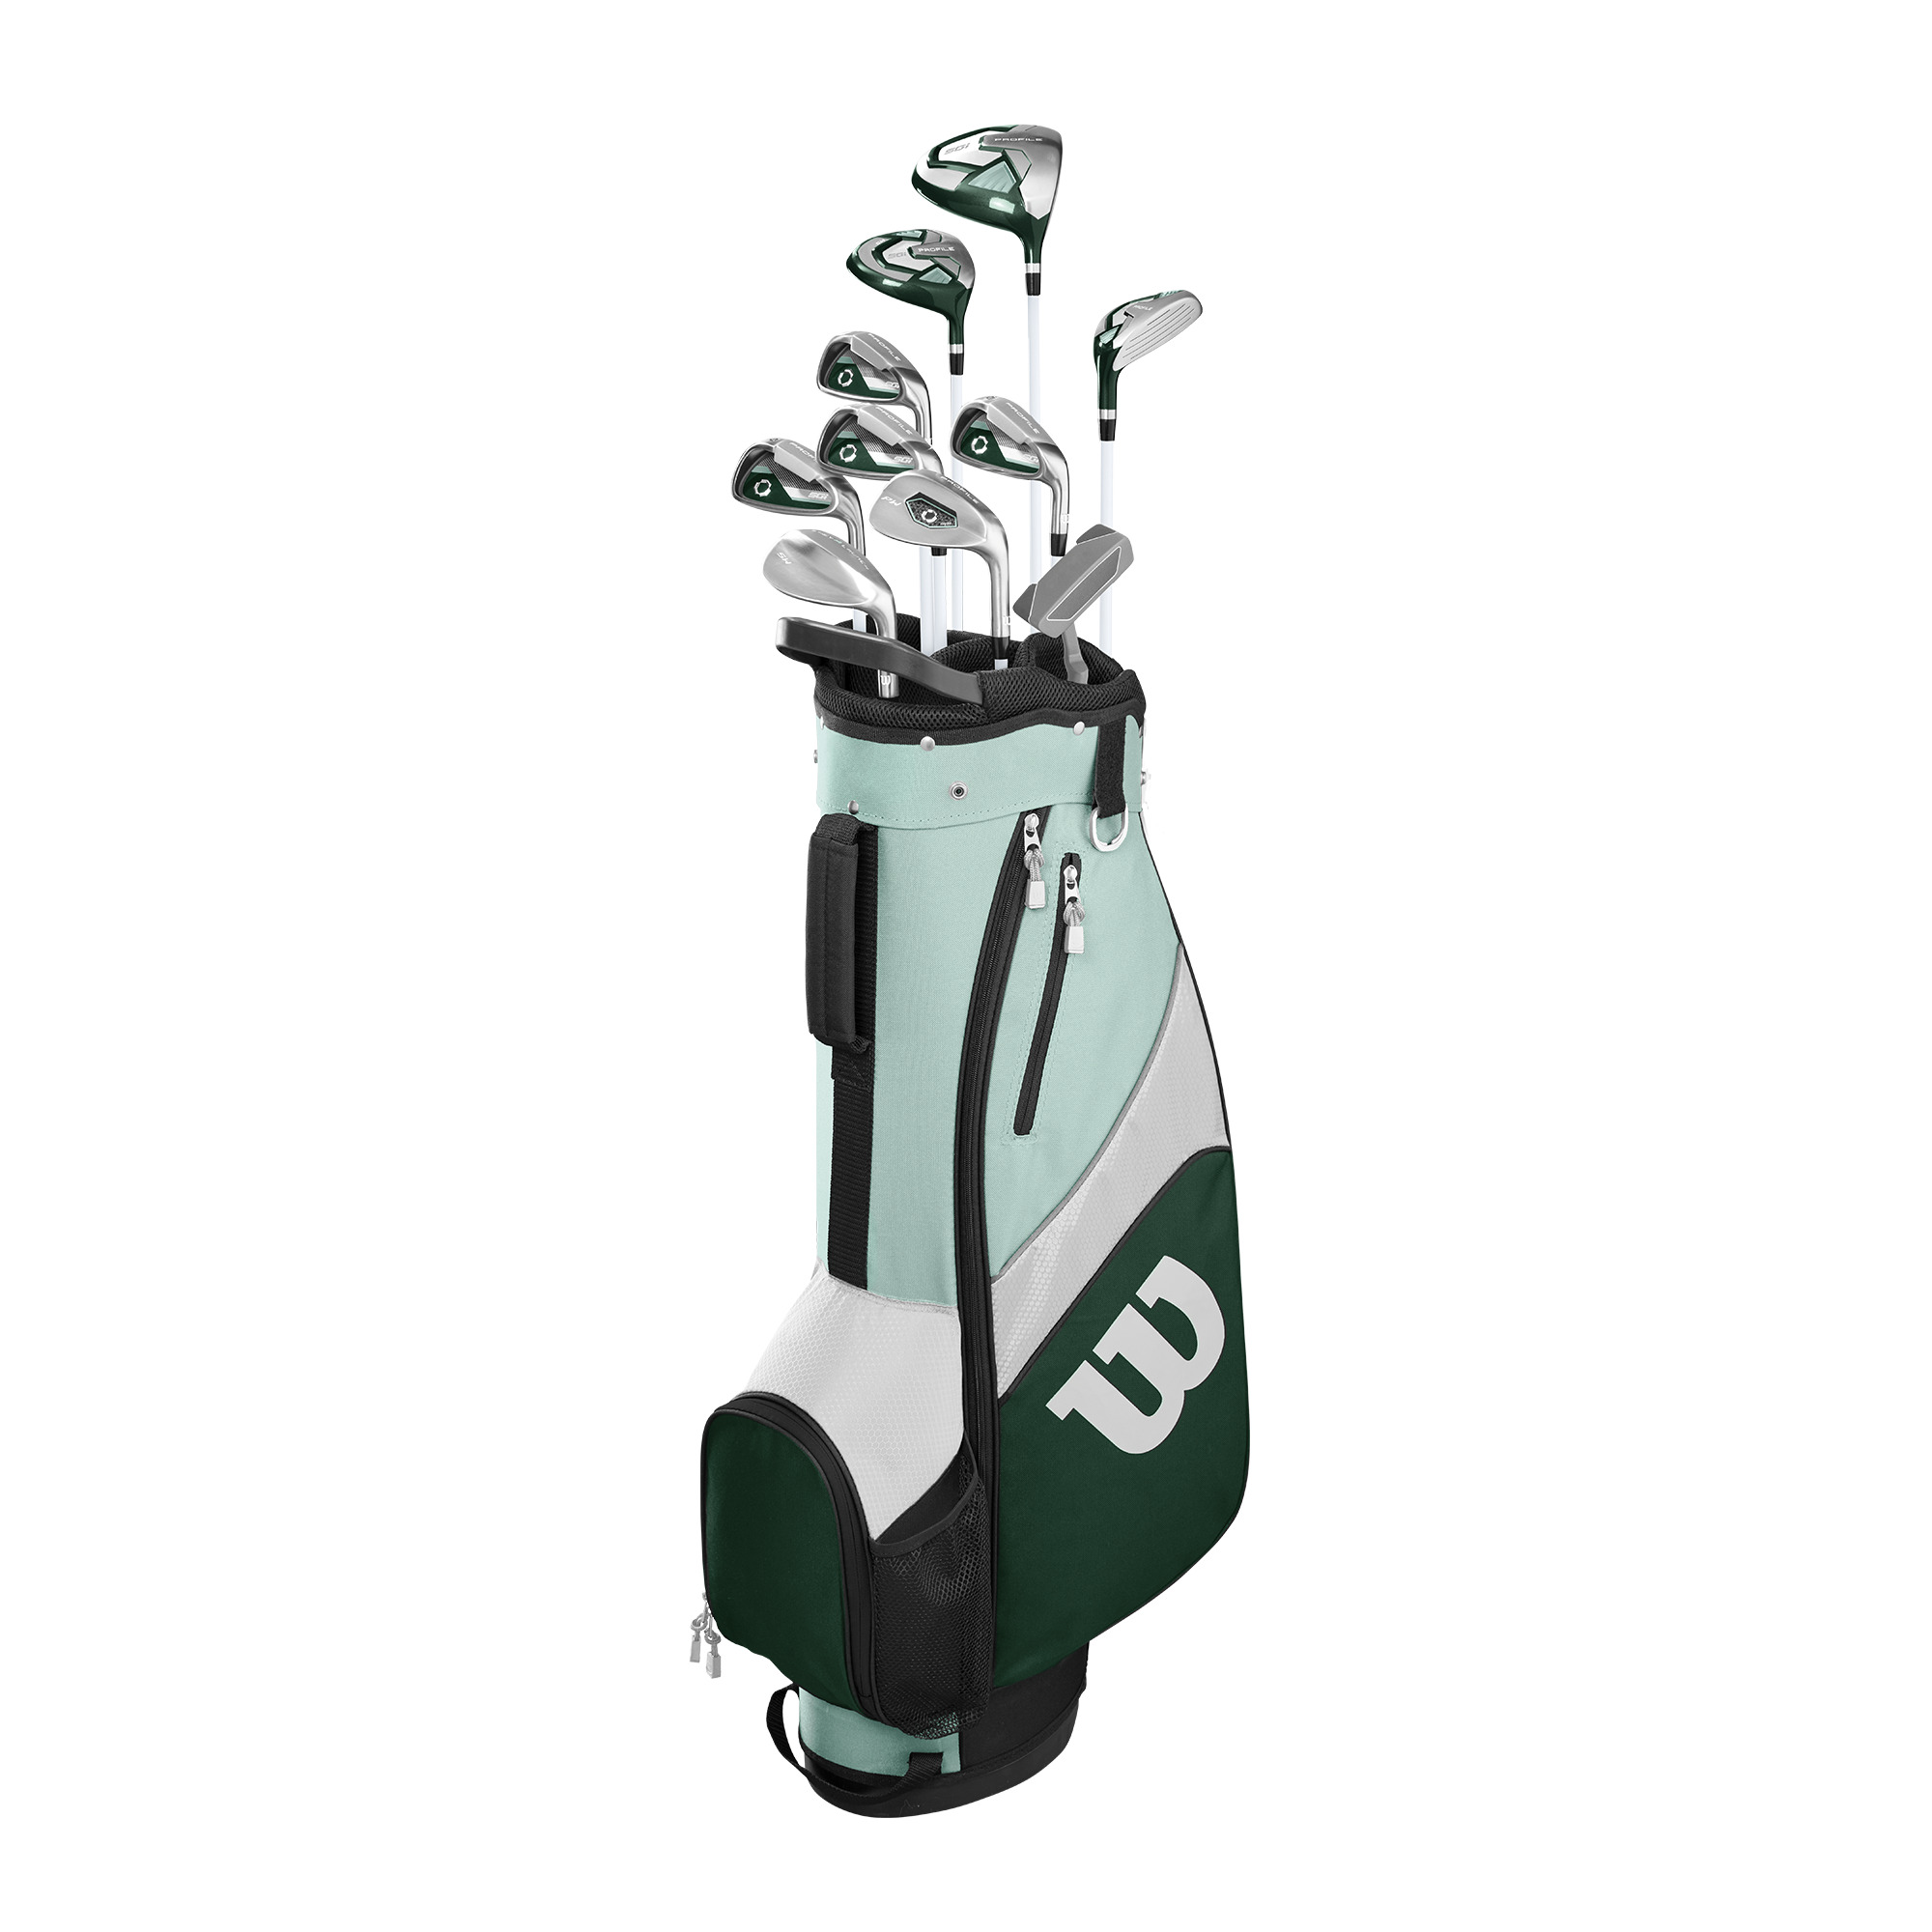 Wilson Golf Profile SGI Teal Women's Golf Complete Set w/ Cart Bag (Left Handed) - image 1 of 8